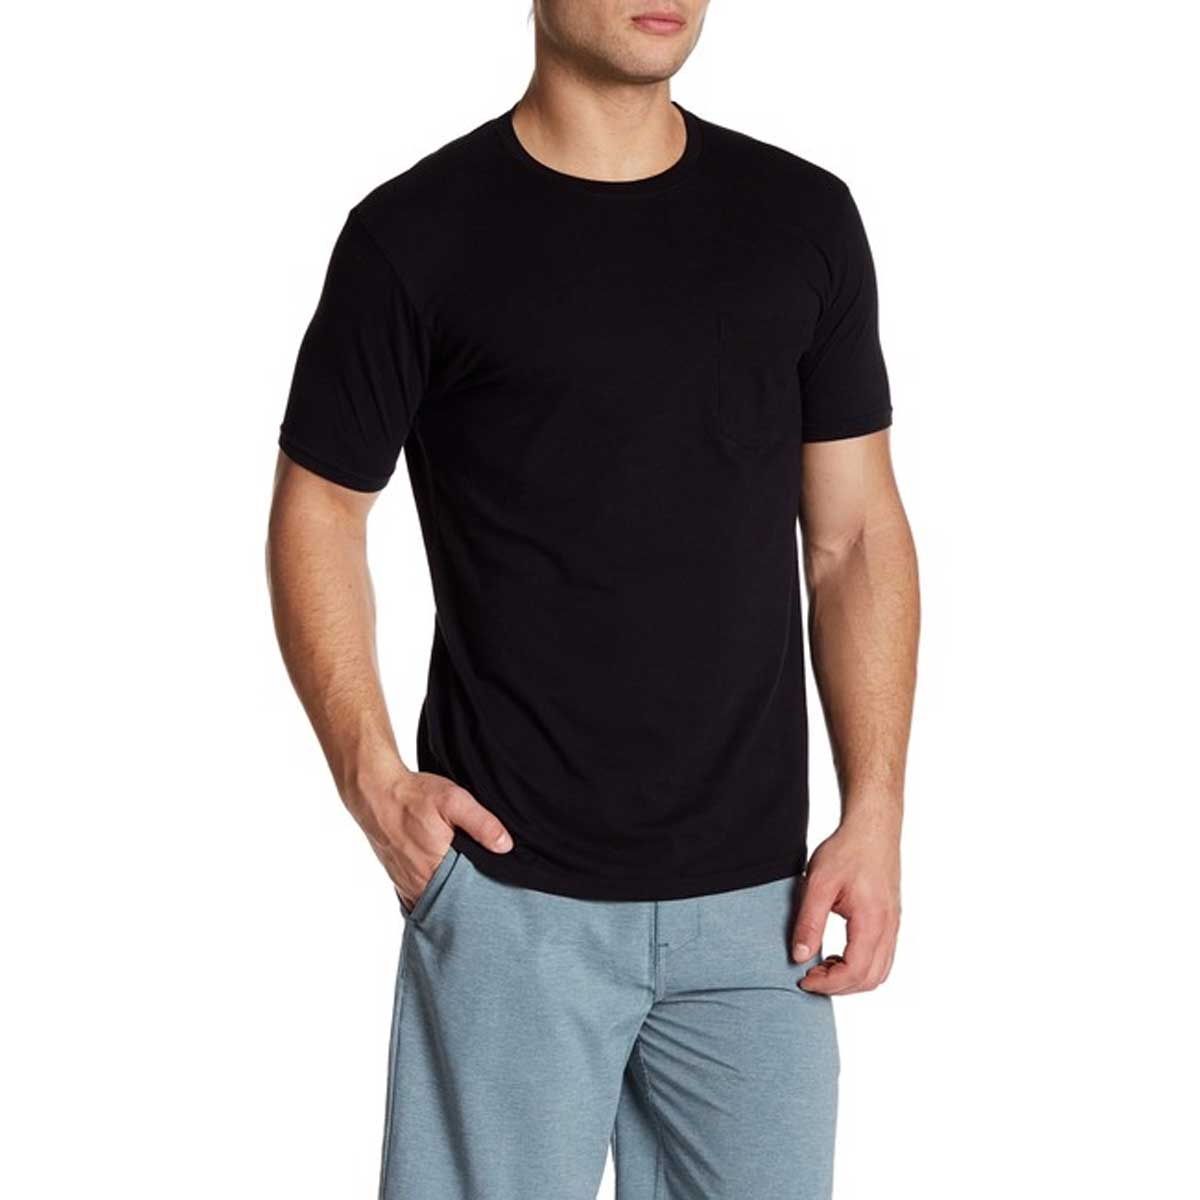 Rip Curl Core Heritage Men's Short-Sleeve Shirts-CTEGZ8